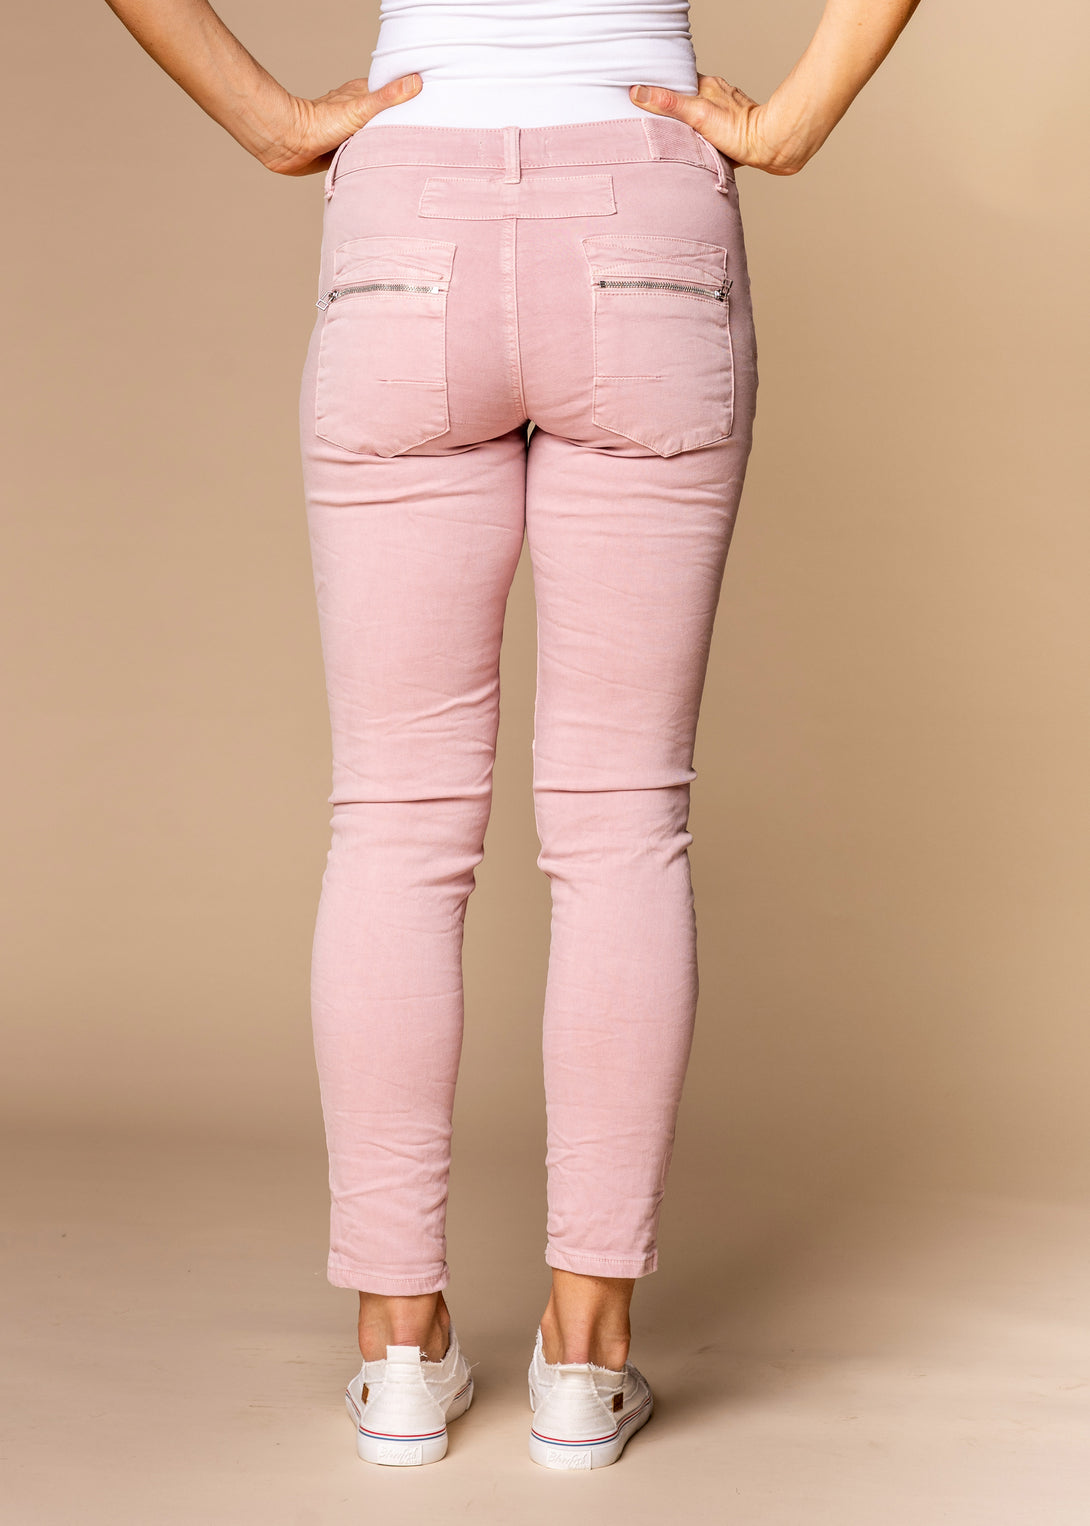 Nessie Pants in Blush - Imagine Fashion